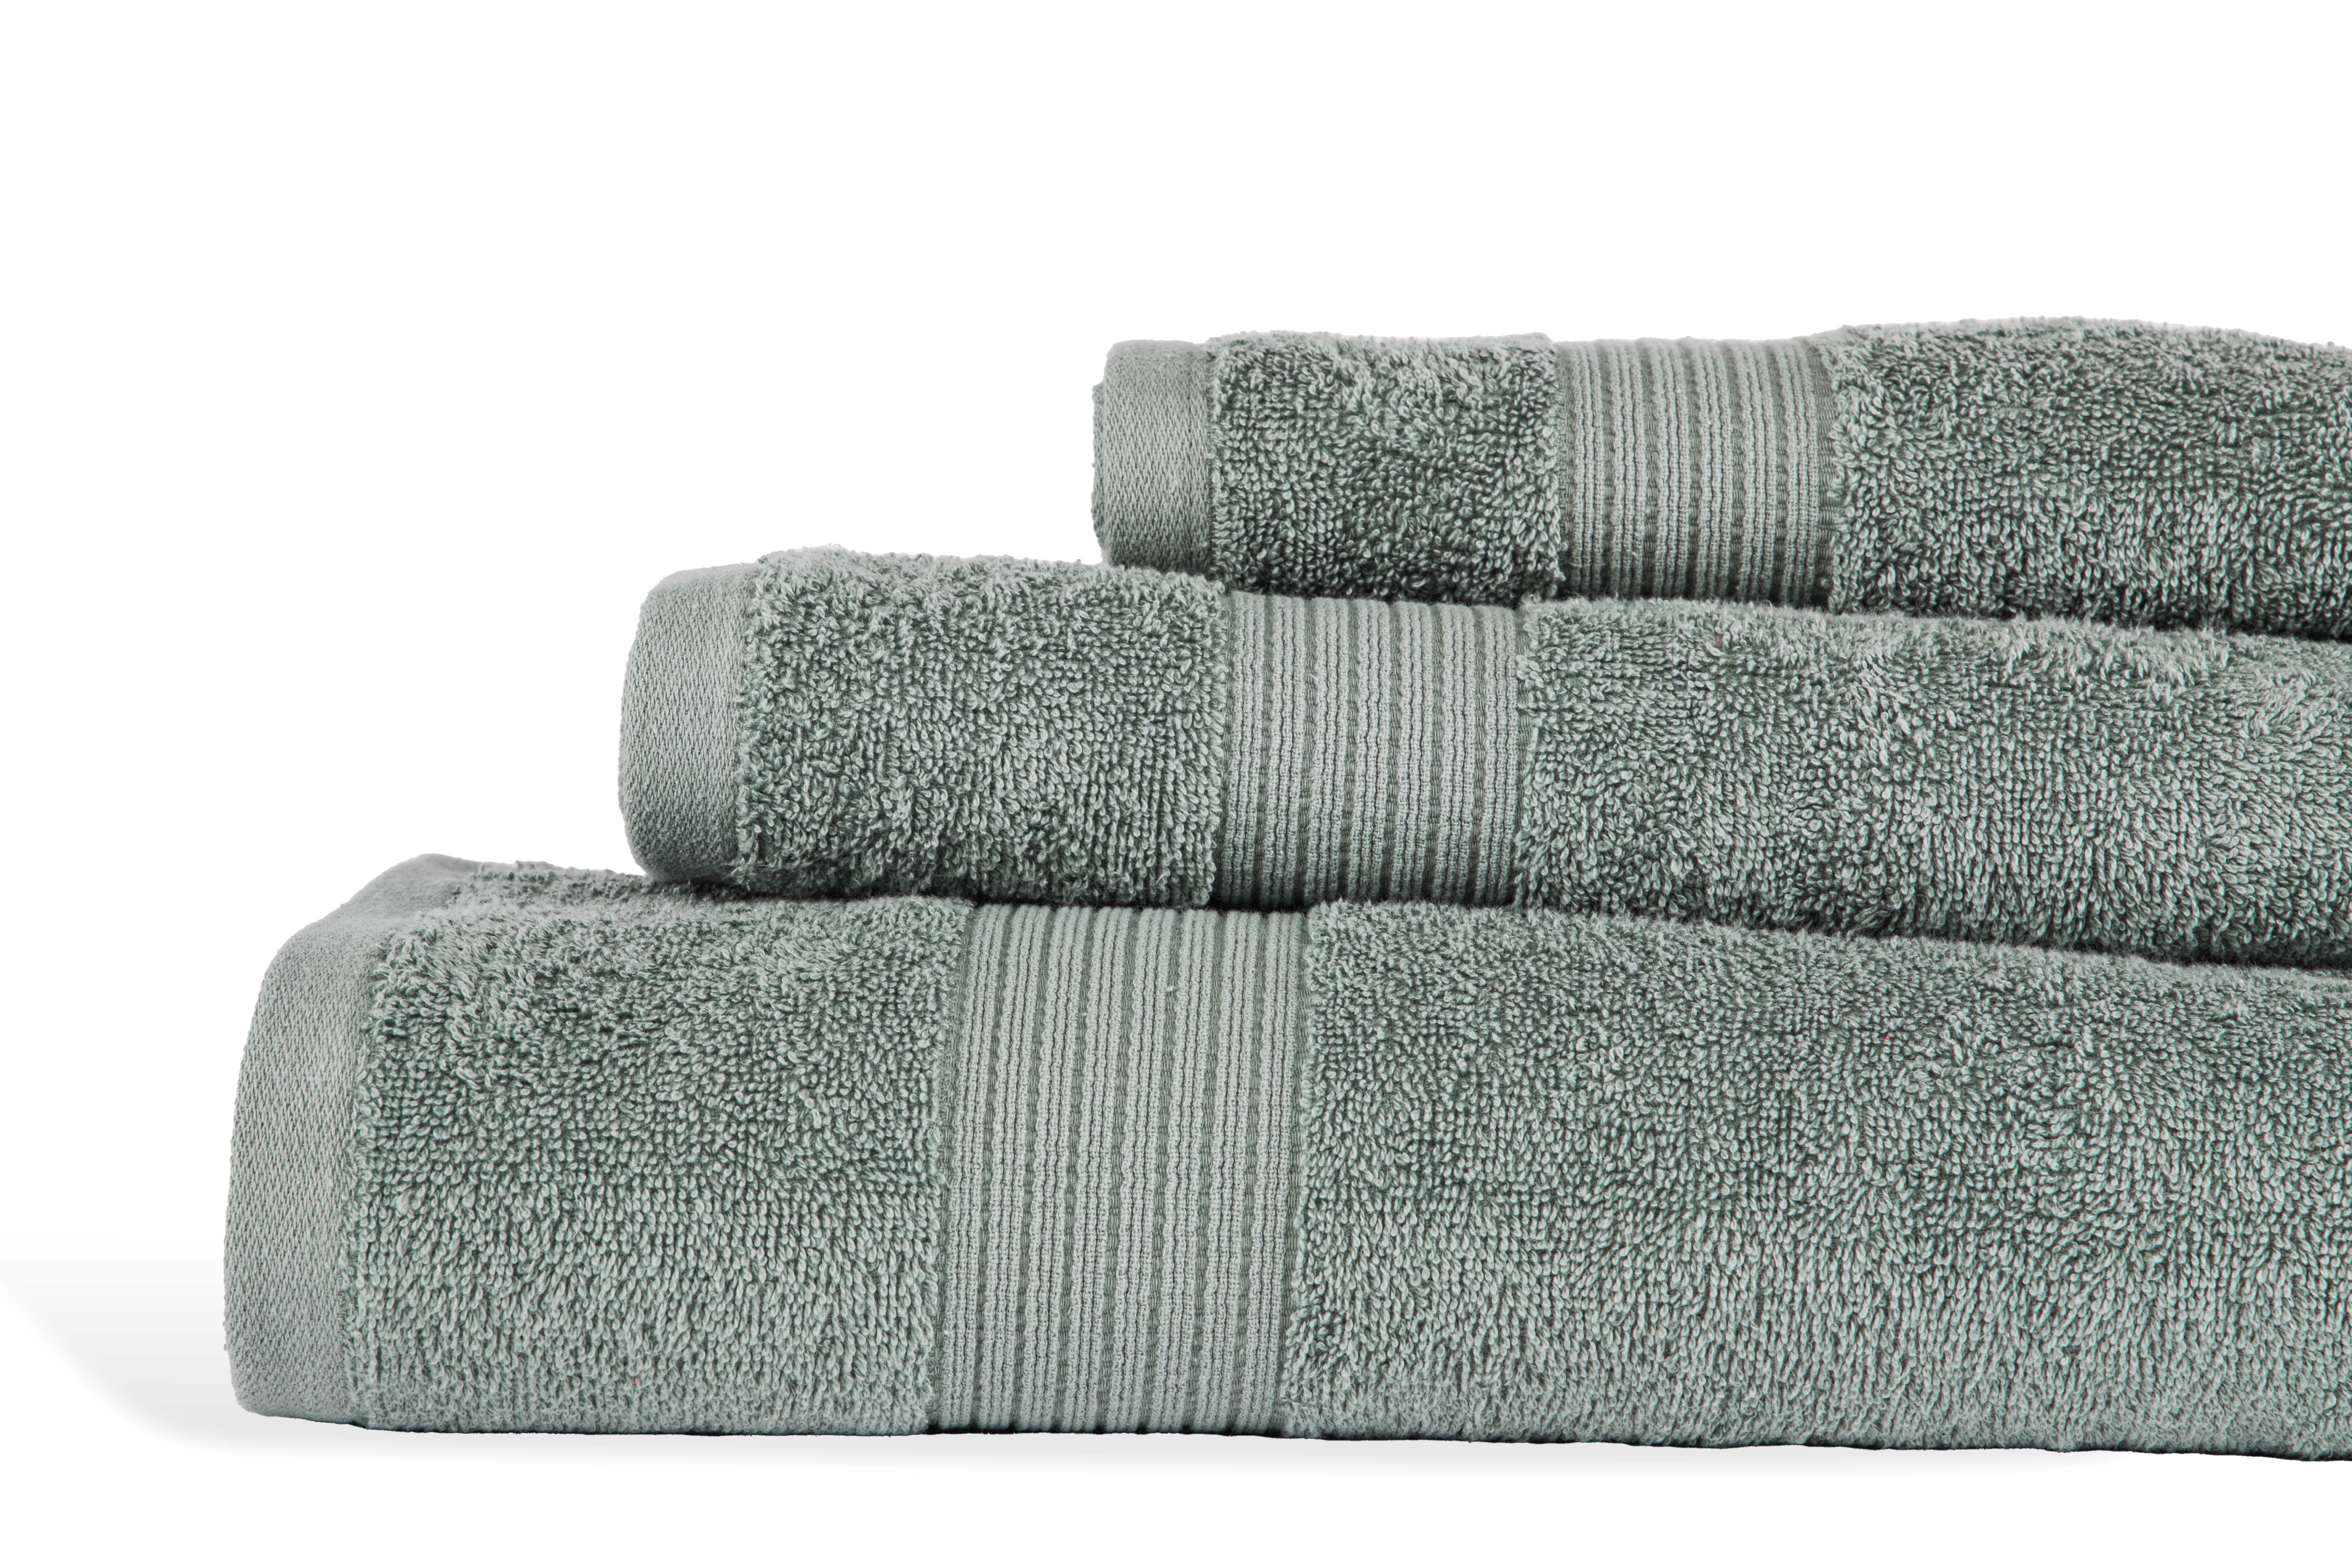 Bath towel EDEN 70x140cm, sage green